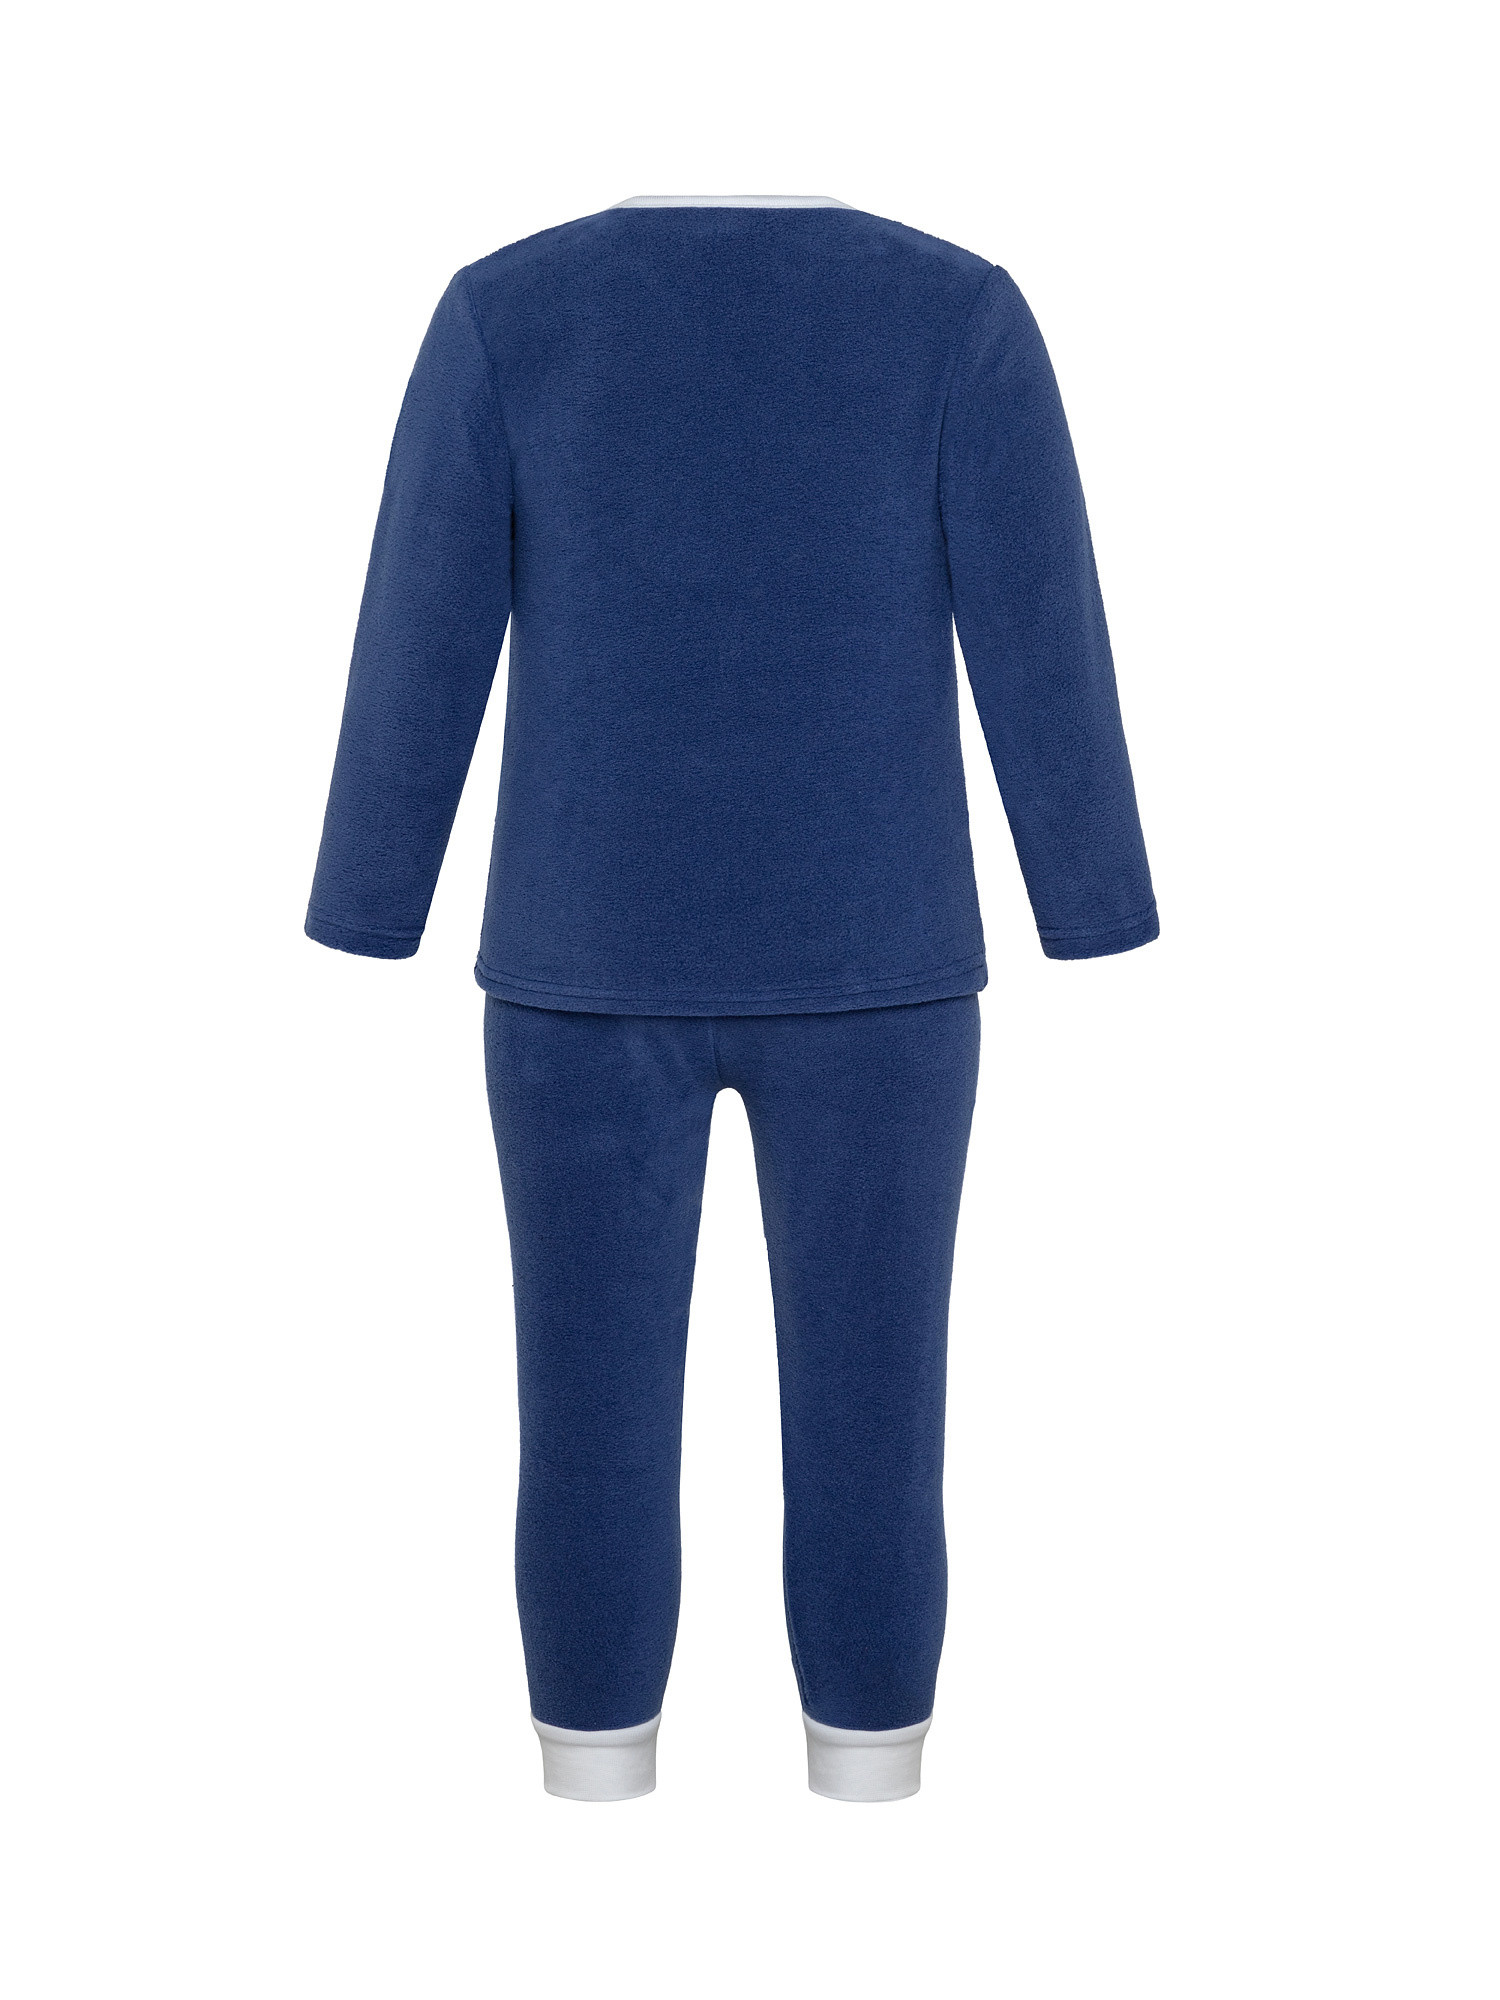 Penguin pattern fleece pajamas, Blue, large image number 1